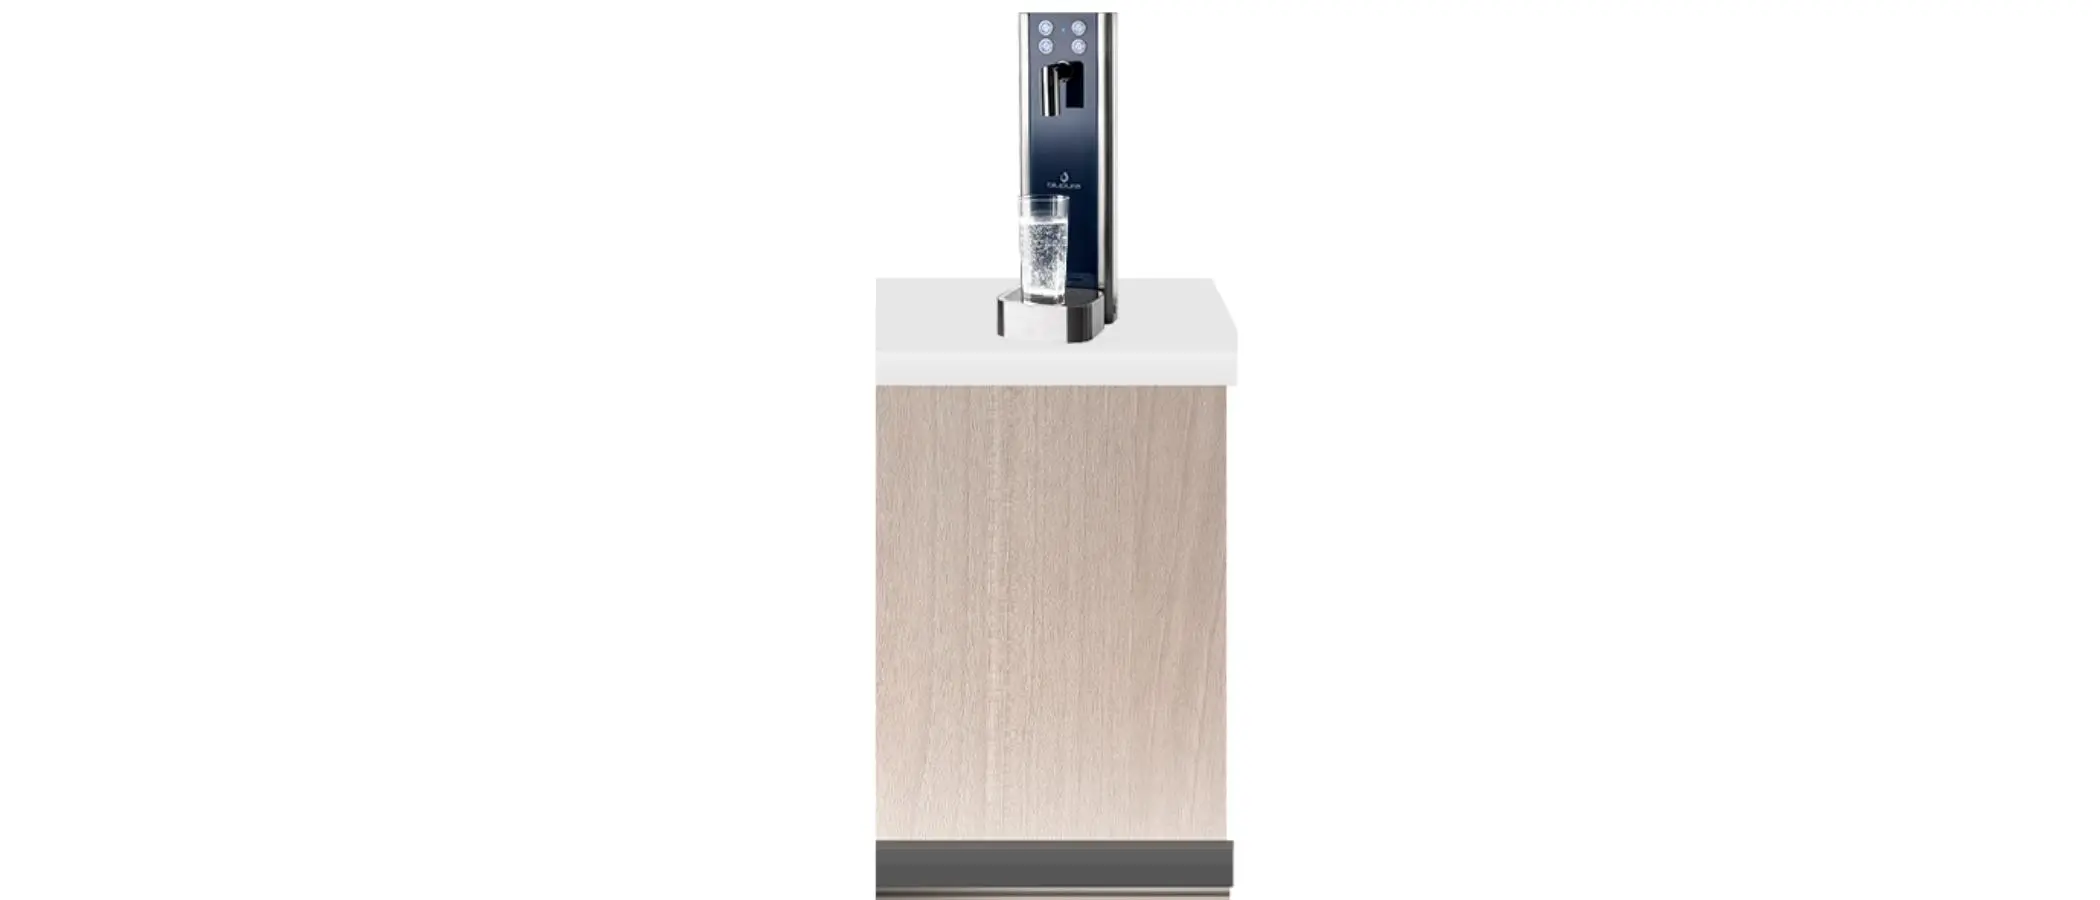 Quench 580 undercounter sparkling water dispenser